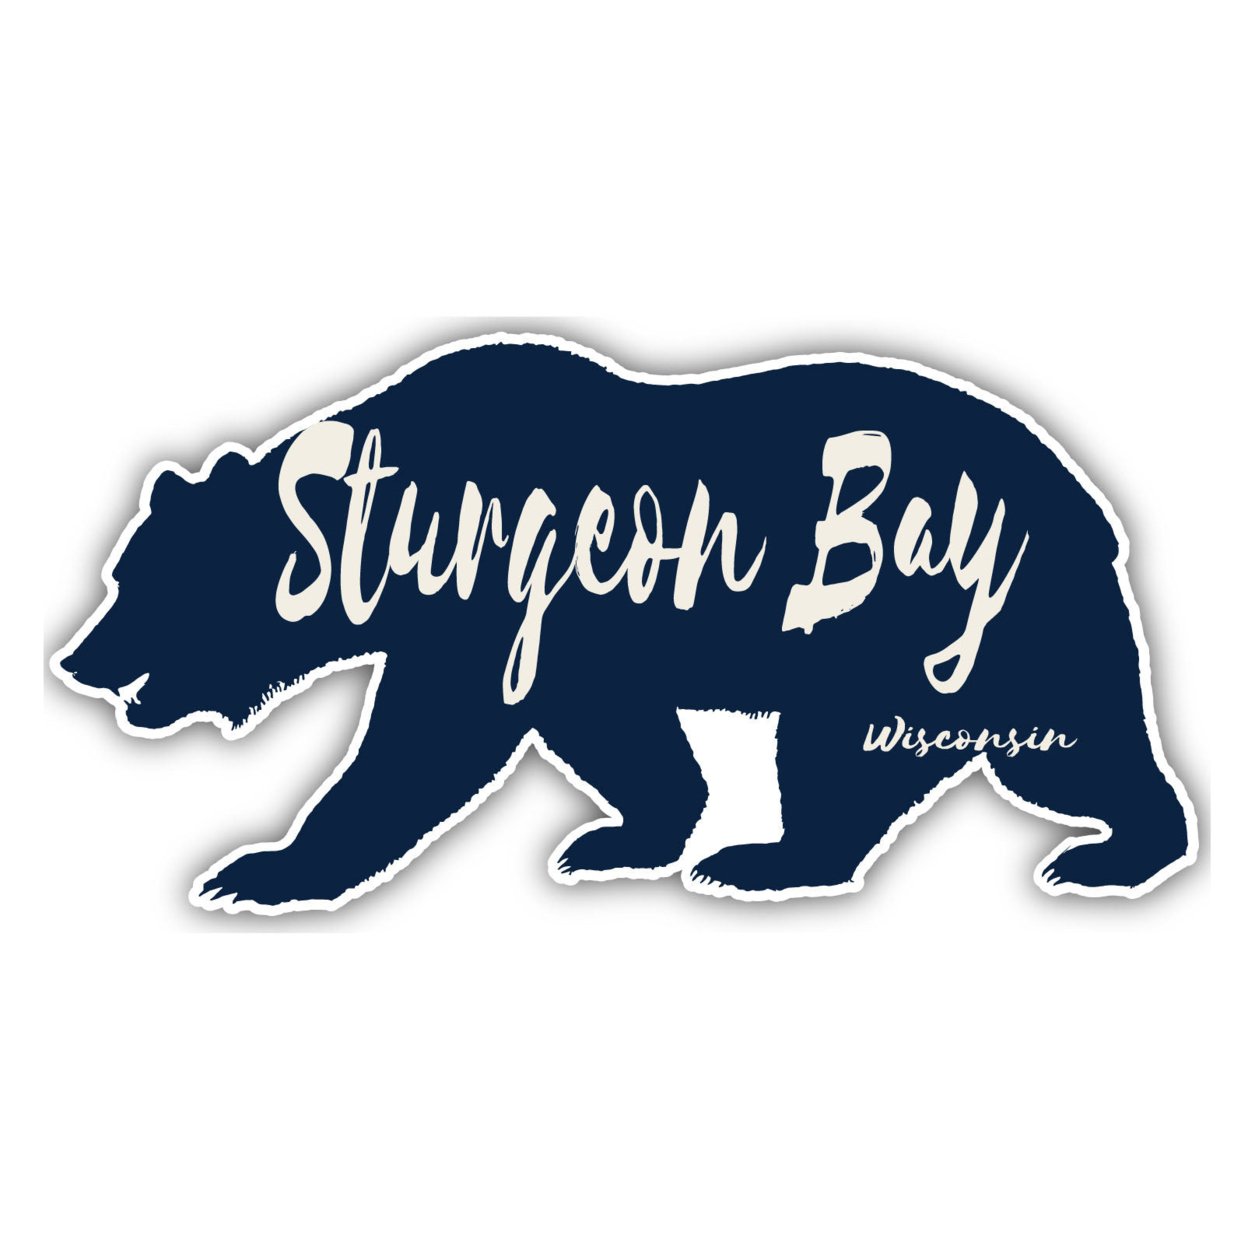 Sturgeon Bay Wisconsin Souvenir Decorative Stickers (Choose Theme And Size) - Single Unit, 2-Inch, Bear